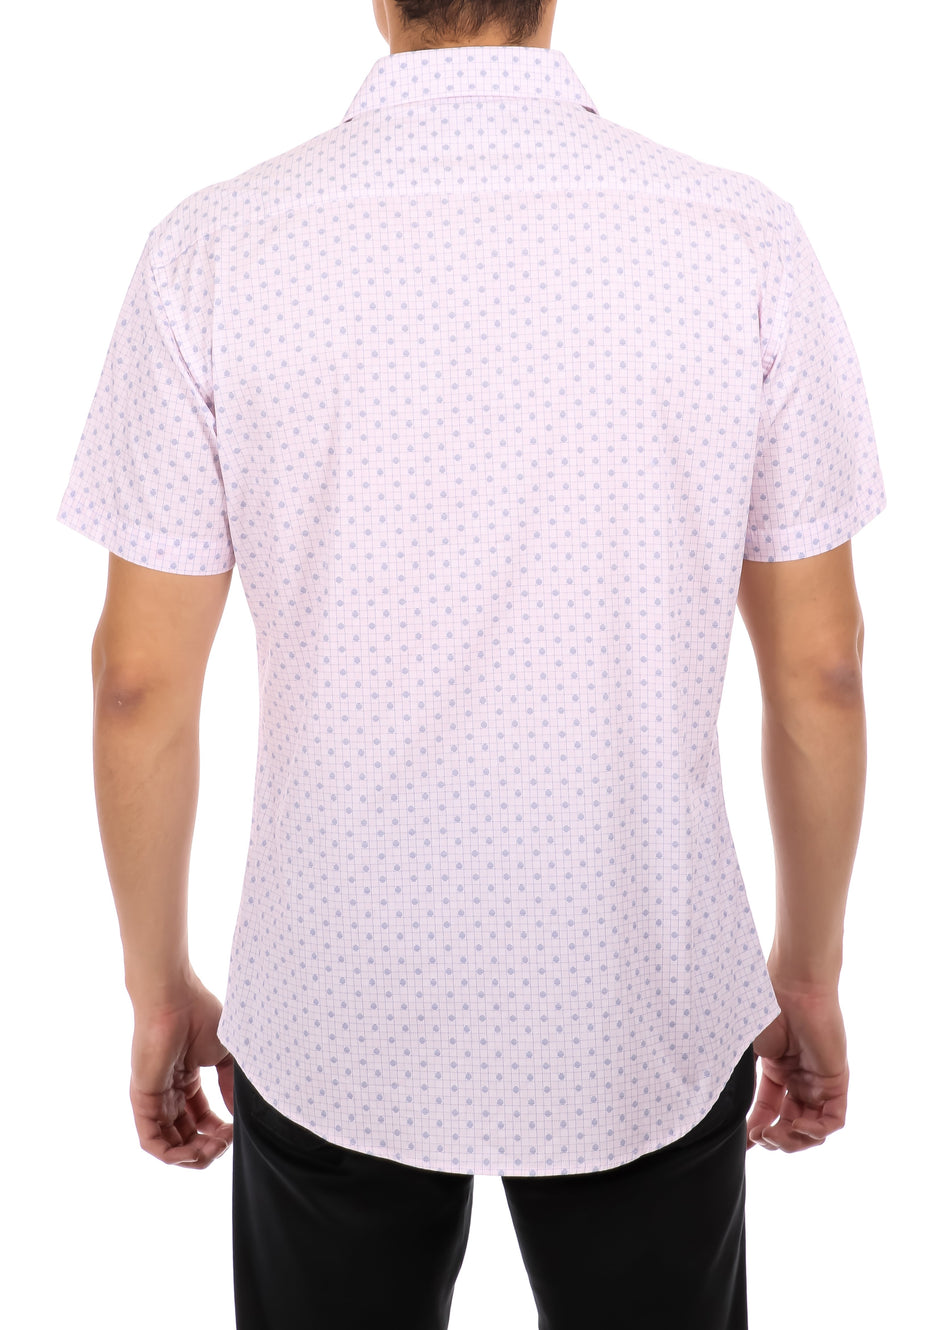 Dashed Dots Short Sleeve Dress Shirt Pink